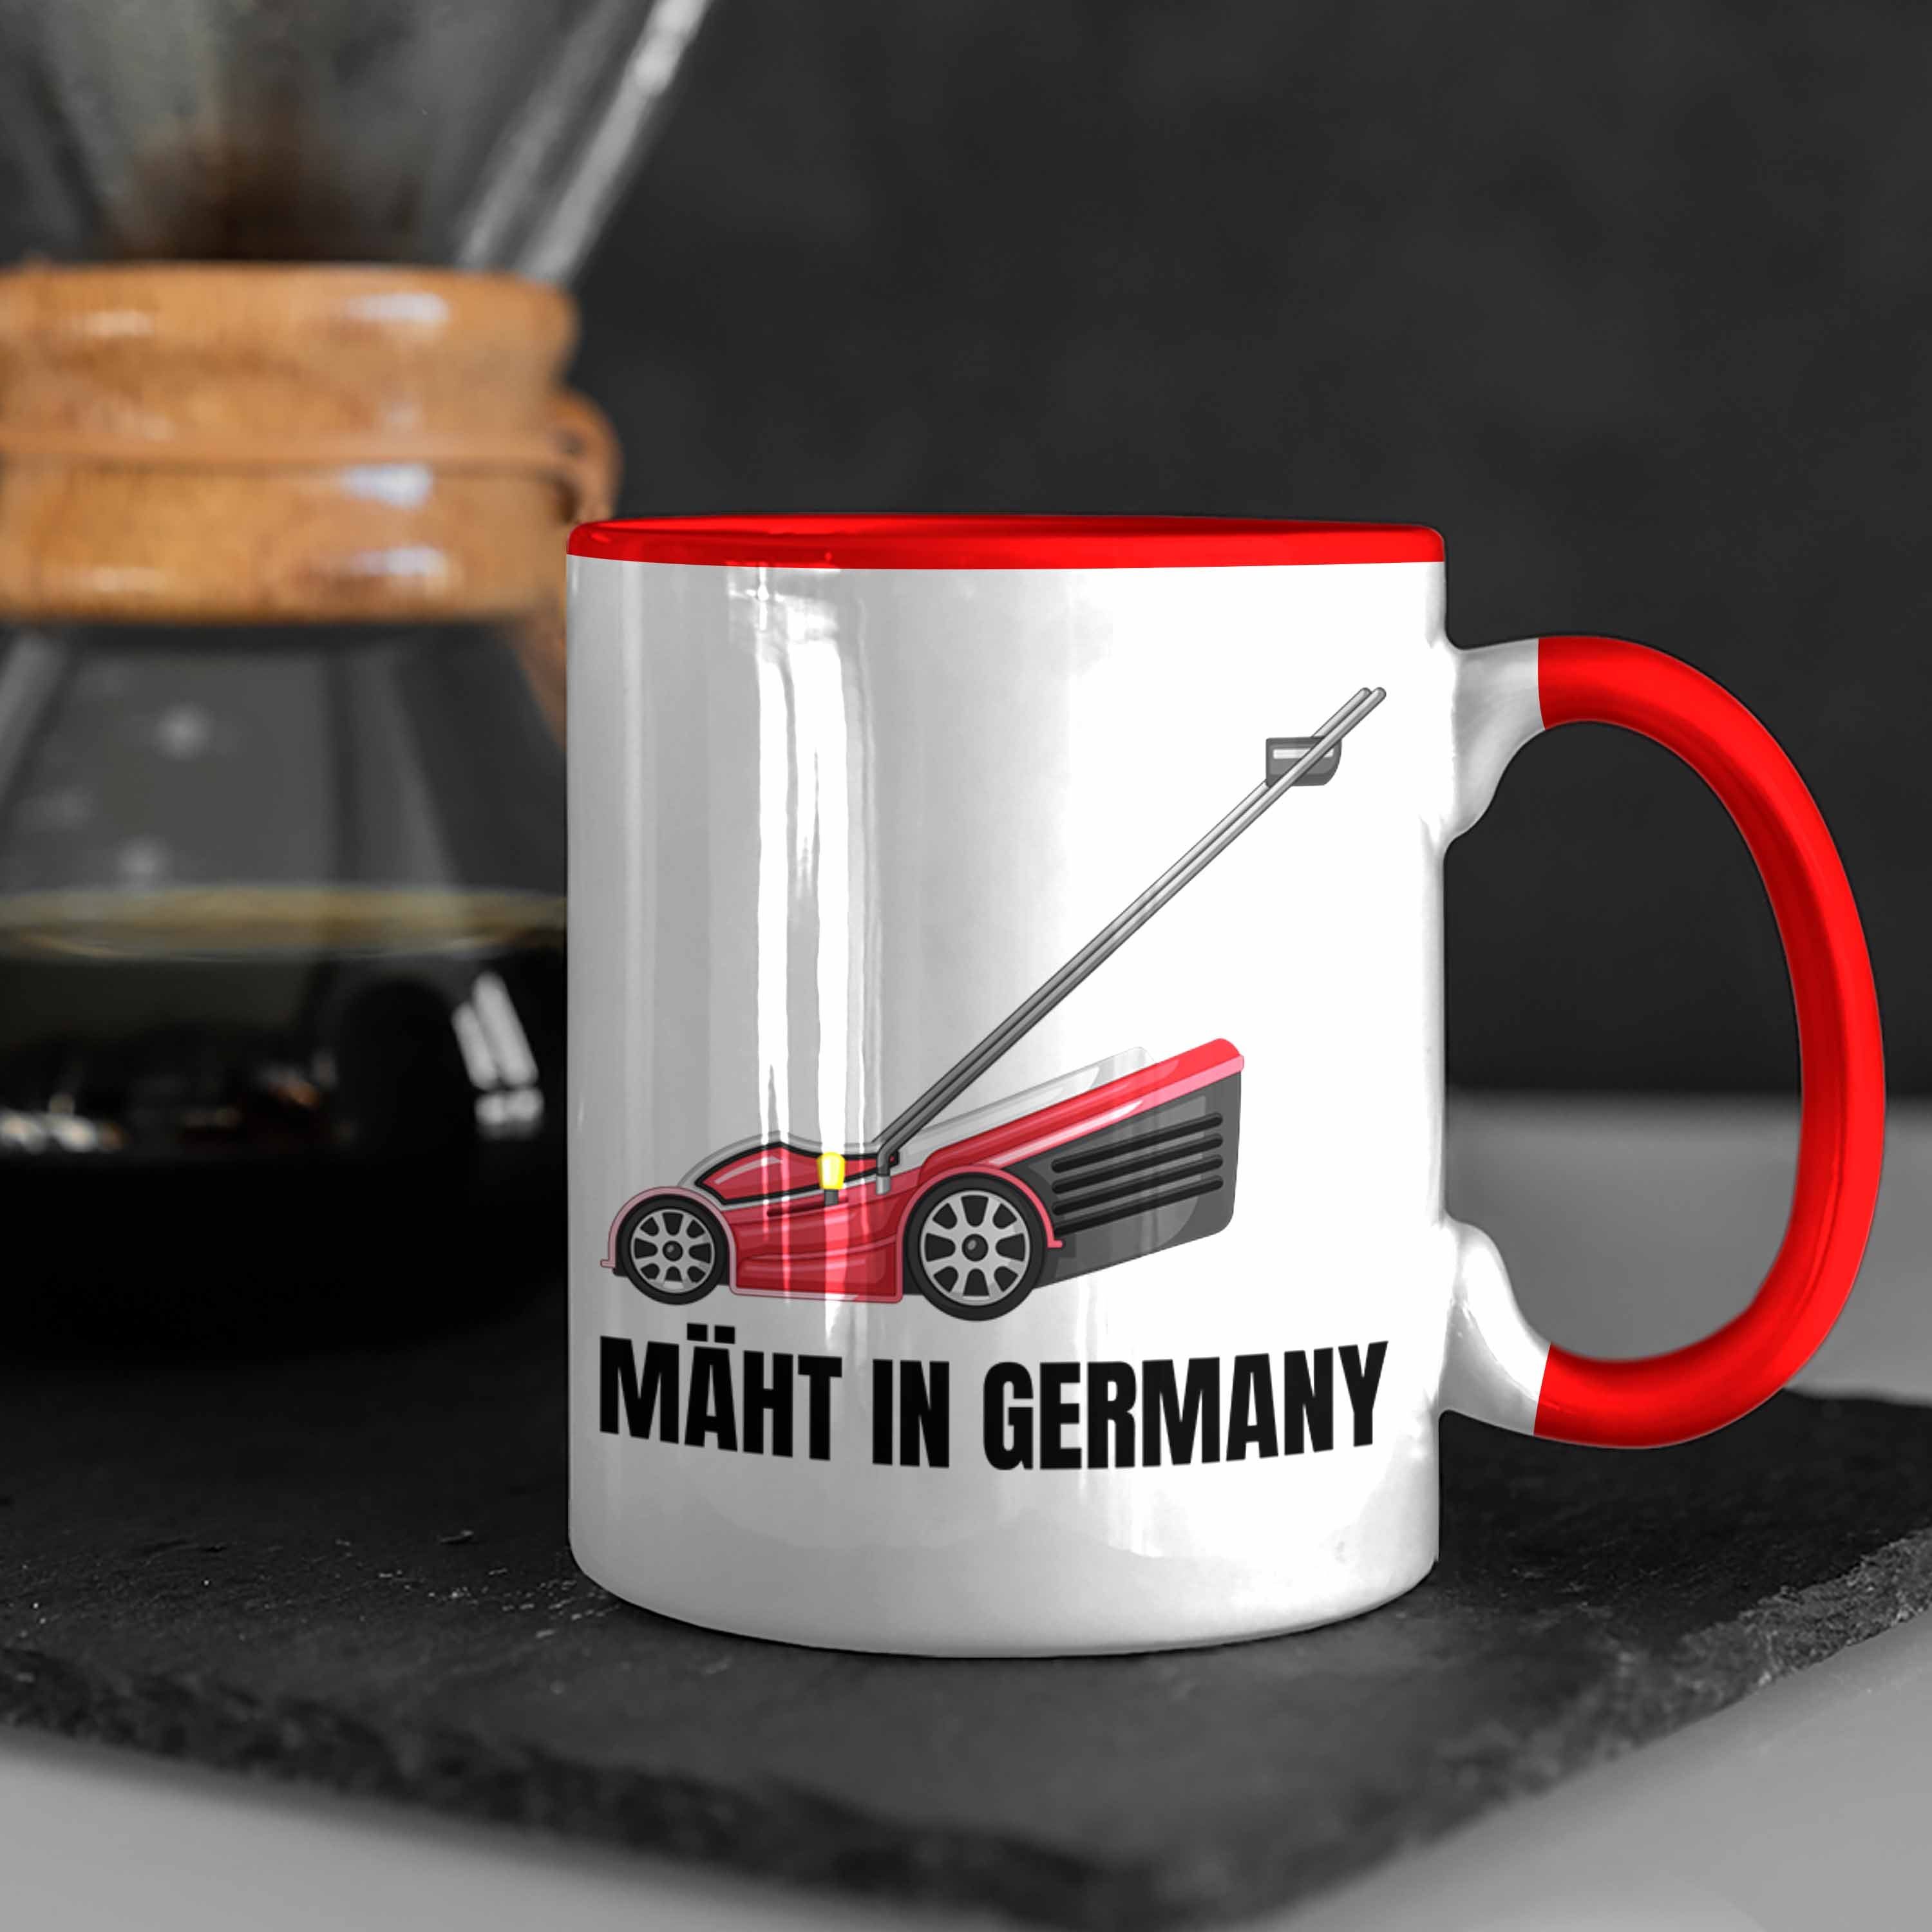 Tasse Trendation Gärtner Kaffee-Becher Geschenk Germany Hobbygärtner für In Mäht Rot Tasse